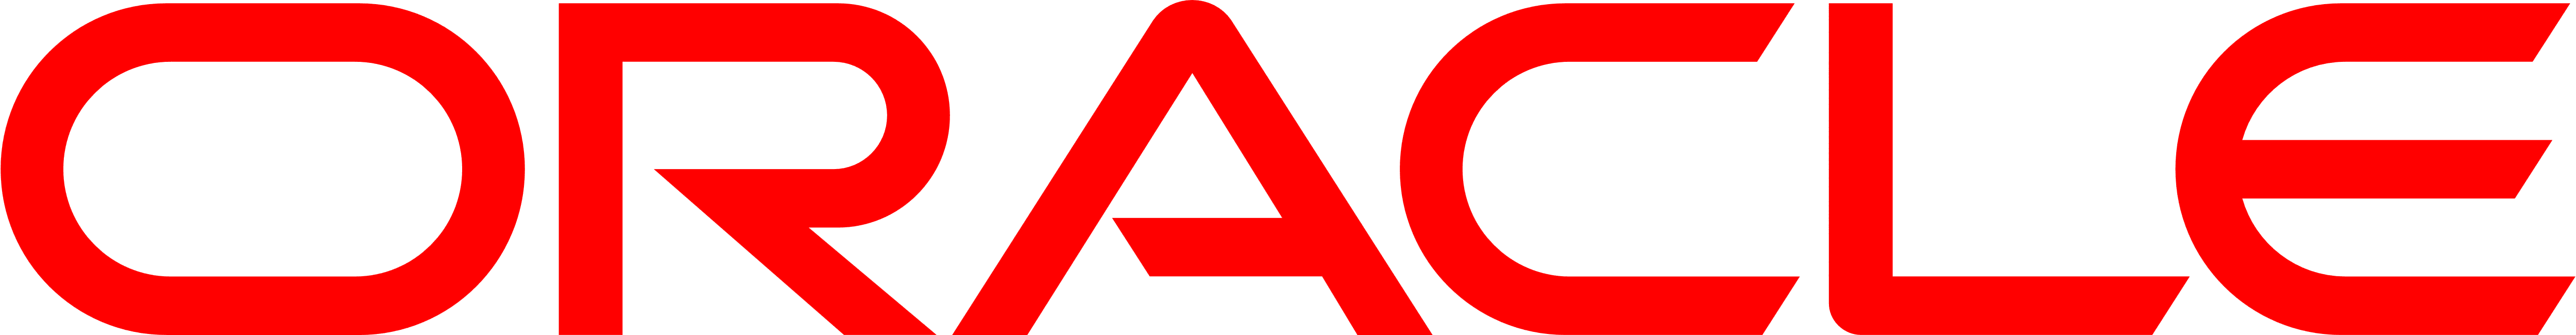 Oracle-Logo-PNG5